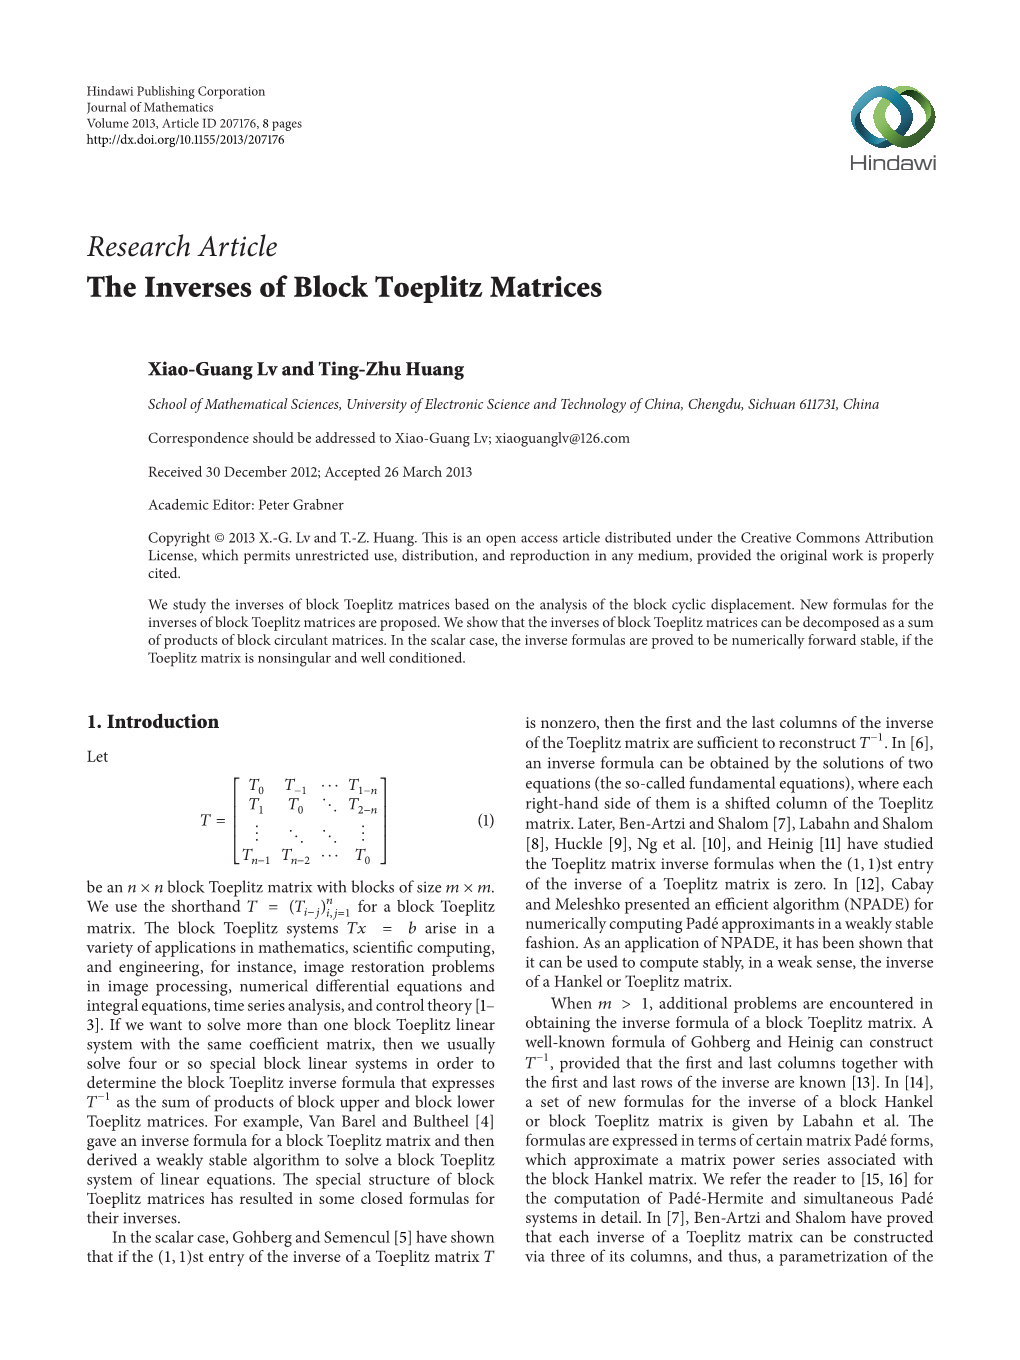 The Inverses of Block Toeplitz Matrices